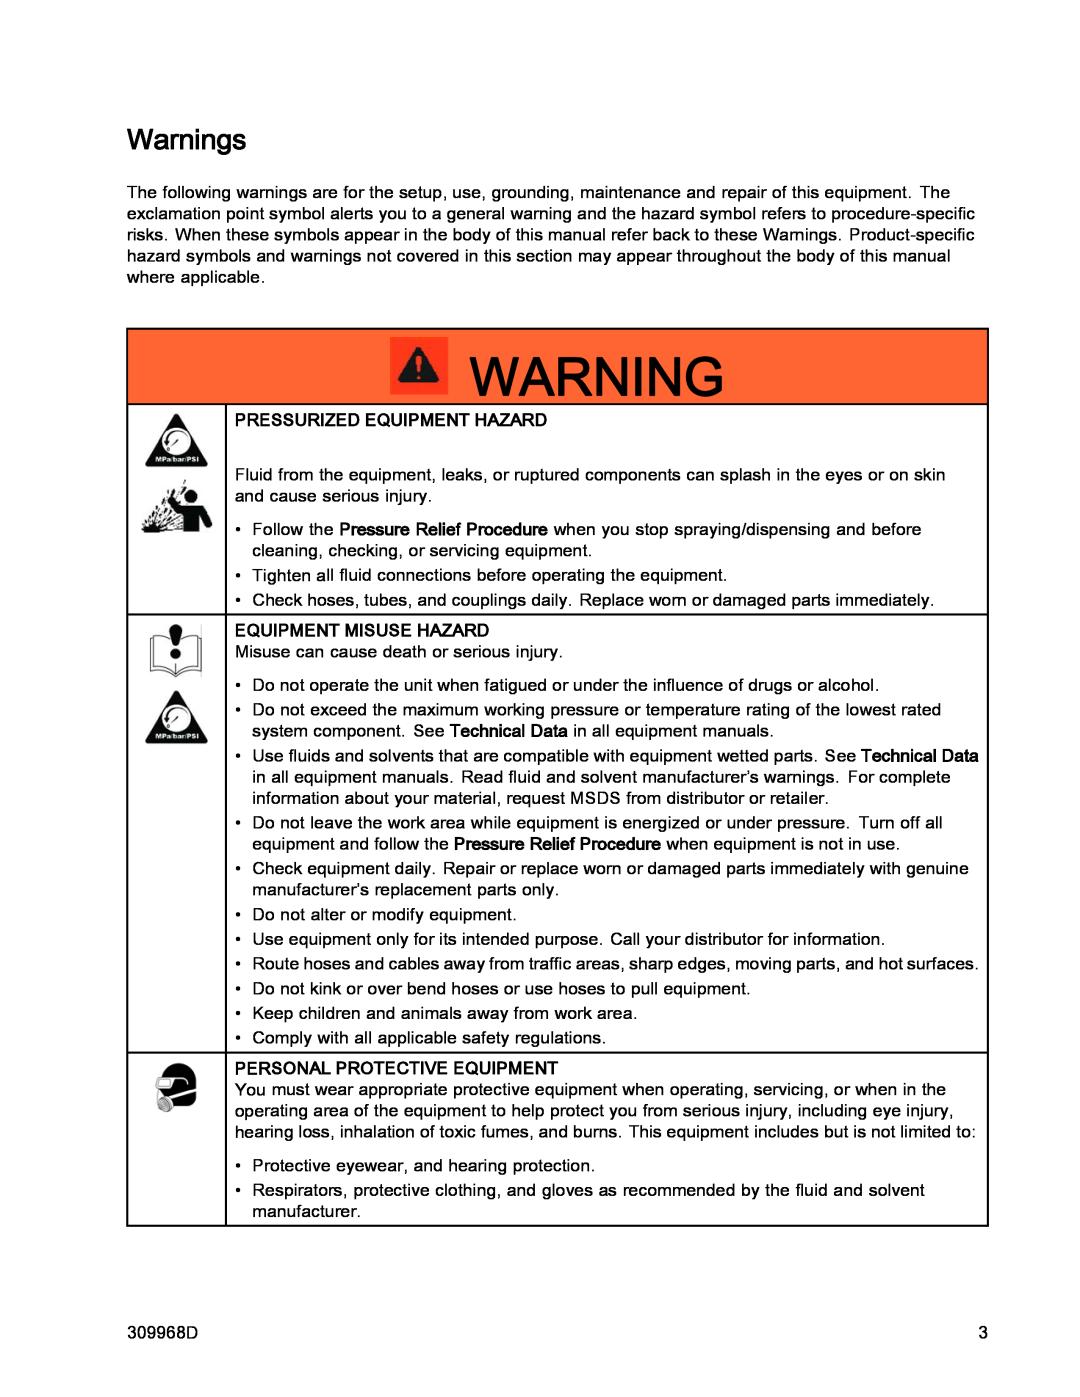 Graco 6 oz. (C04090) Warnings, Pressurized Equipment Hazard, Equipment Misuse Hazard, Personal Protective Equipment 